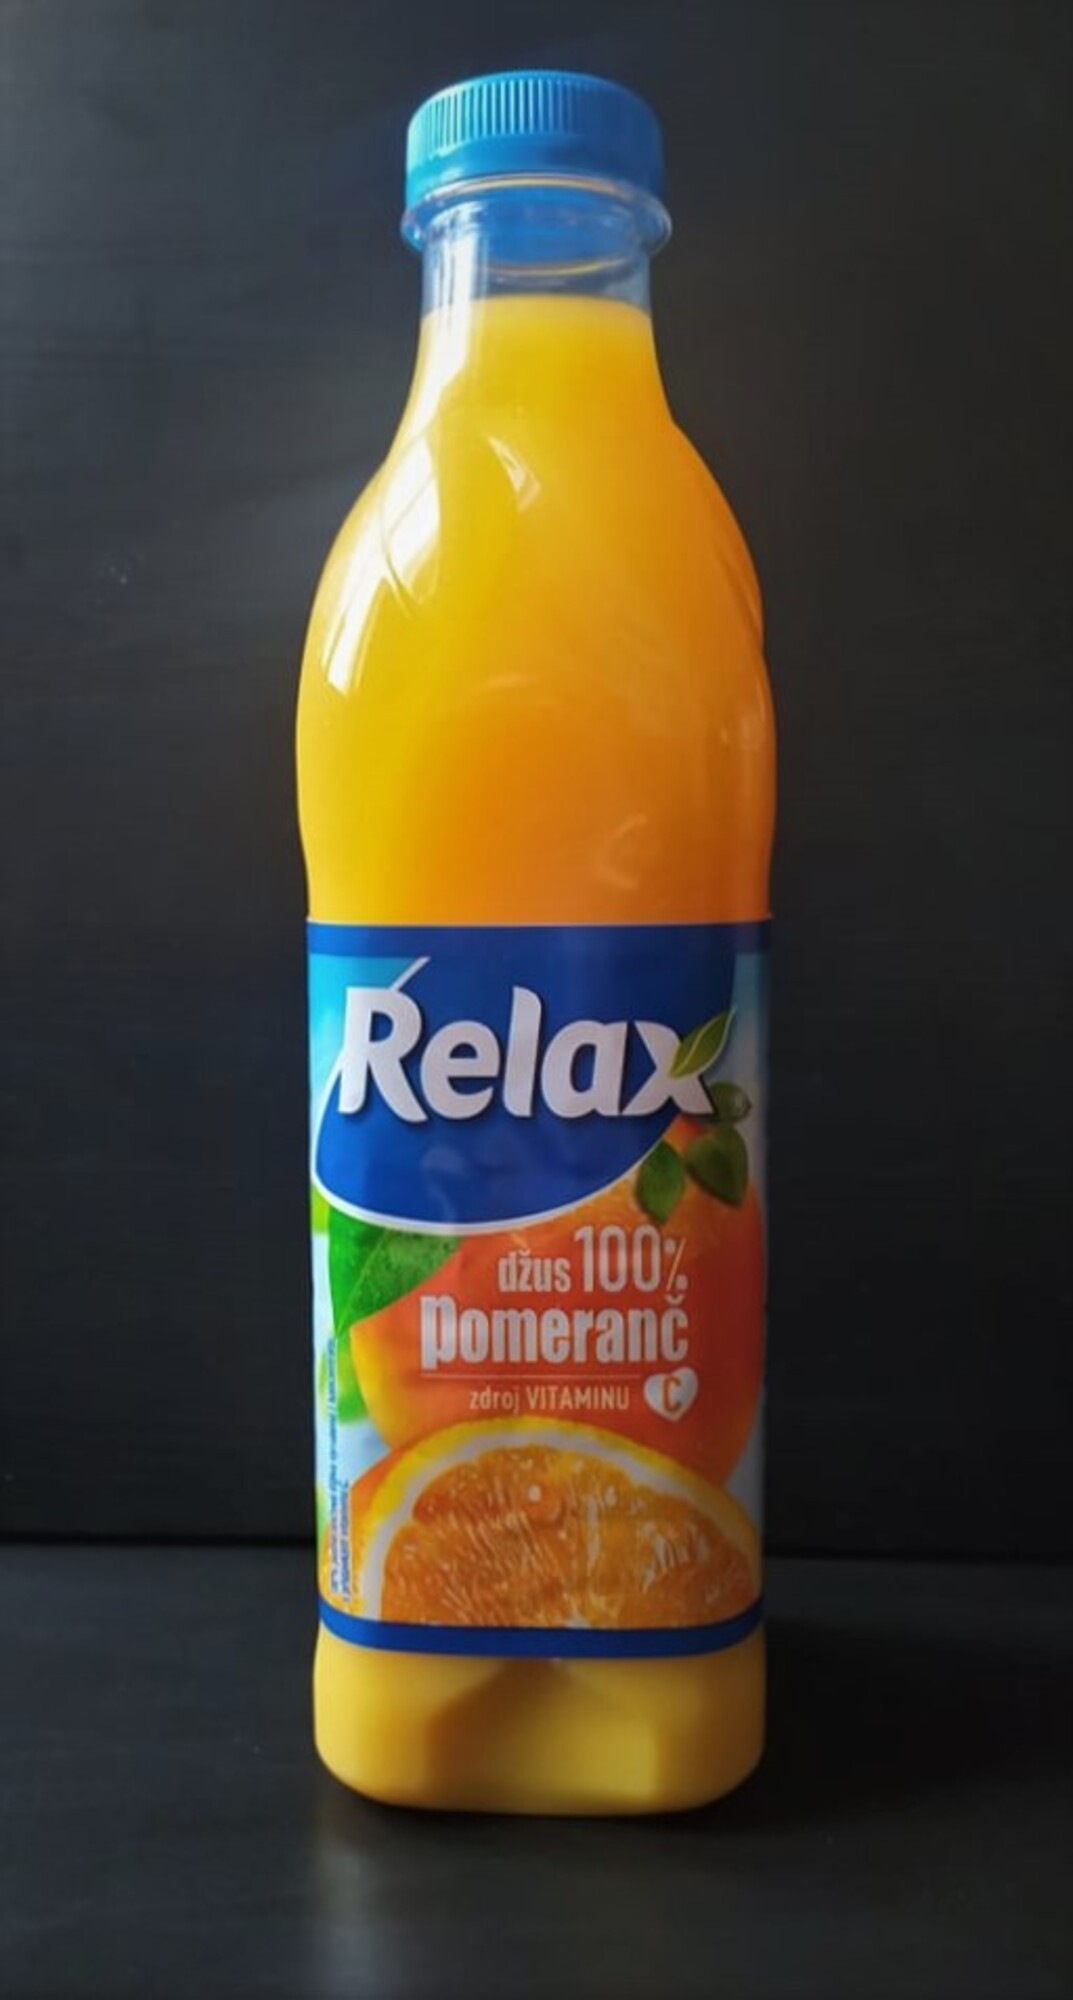 test džus pomeranč 2020 Relax plast